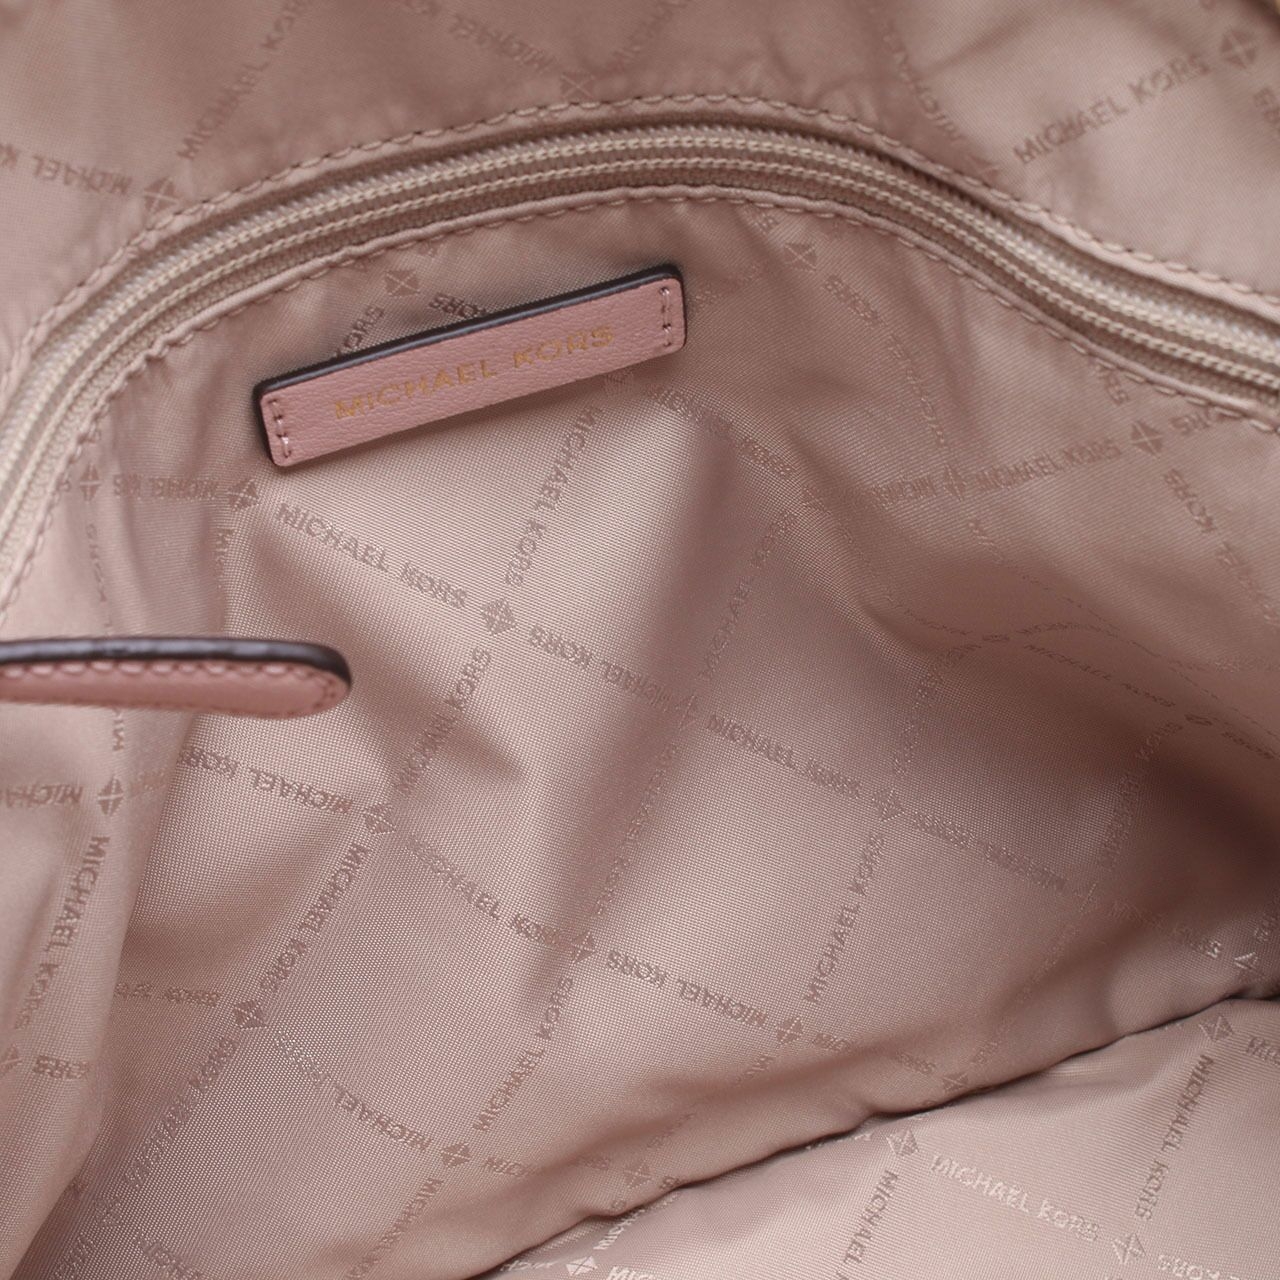 Michael Kors Emmy Pink Blossom Saffiano Leather Large Dome Satchel Bag